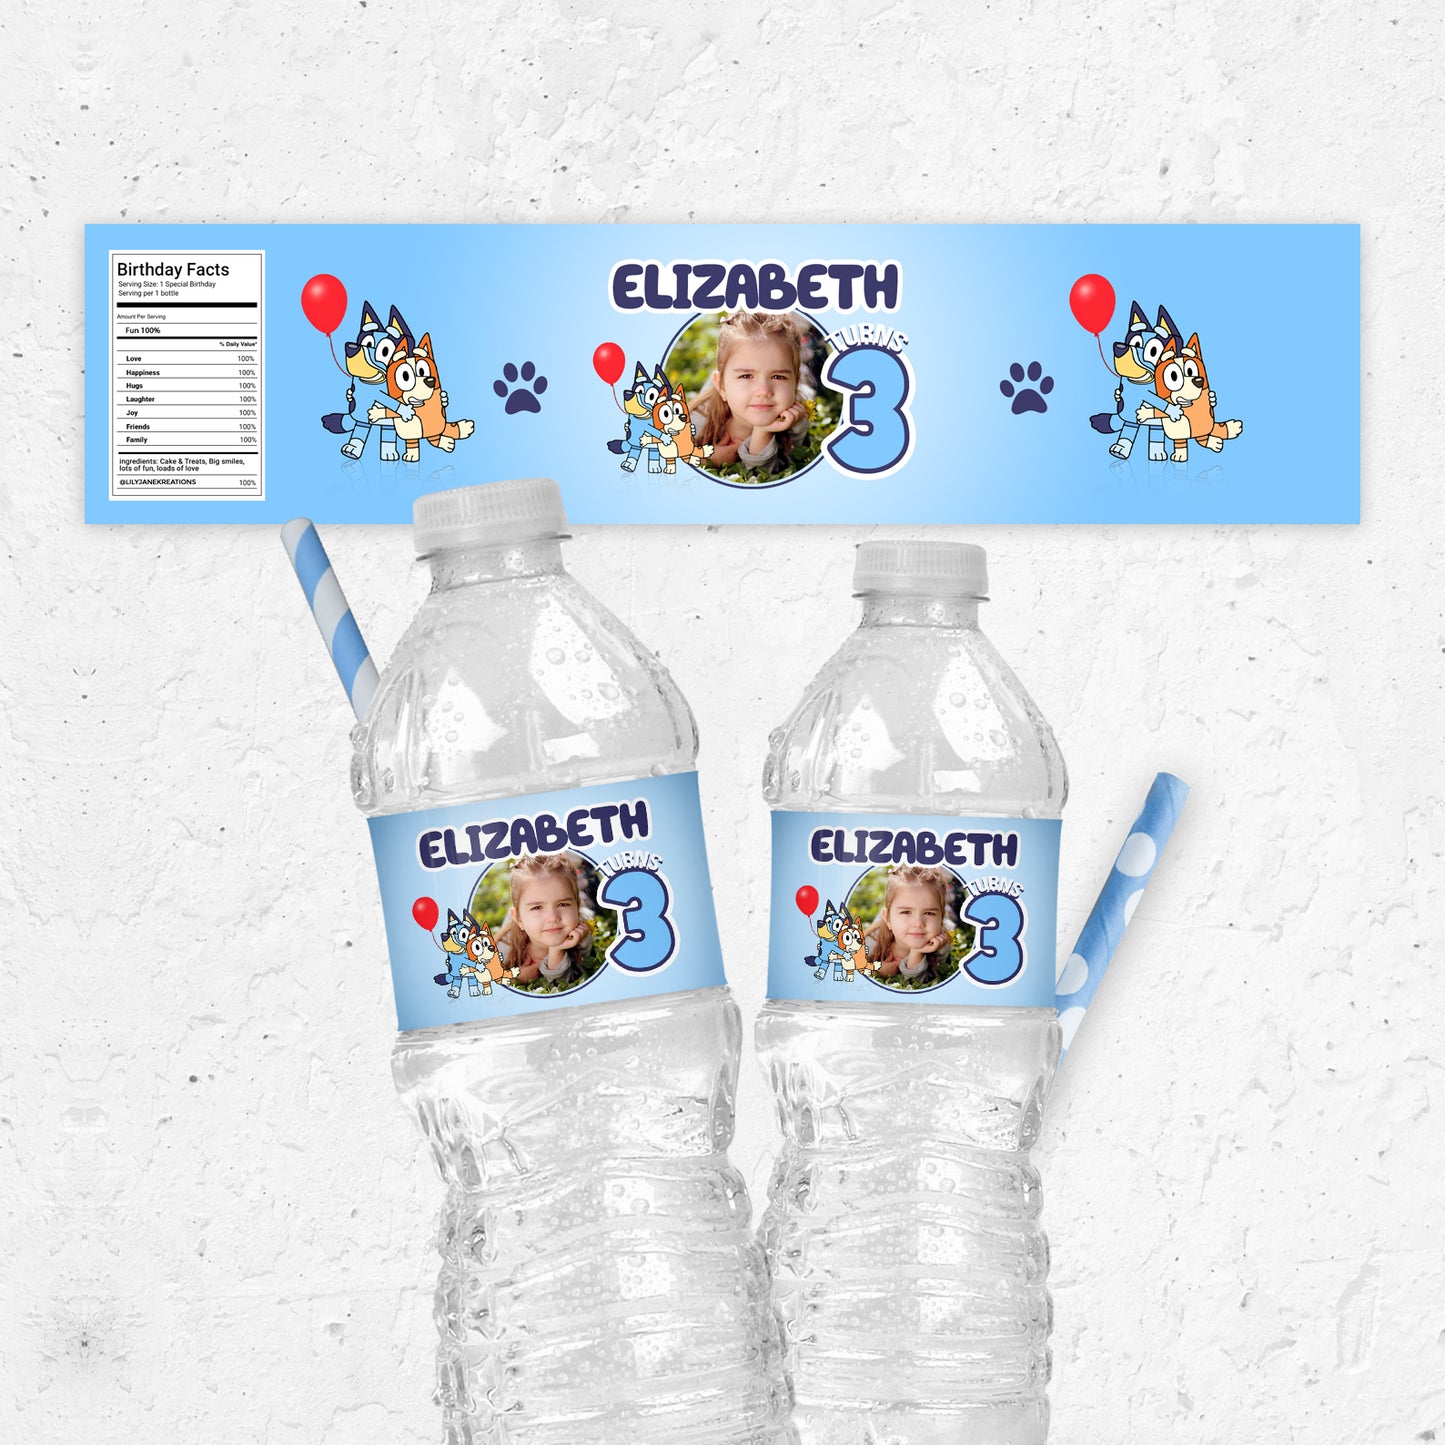 free frozen water bottle printables